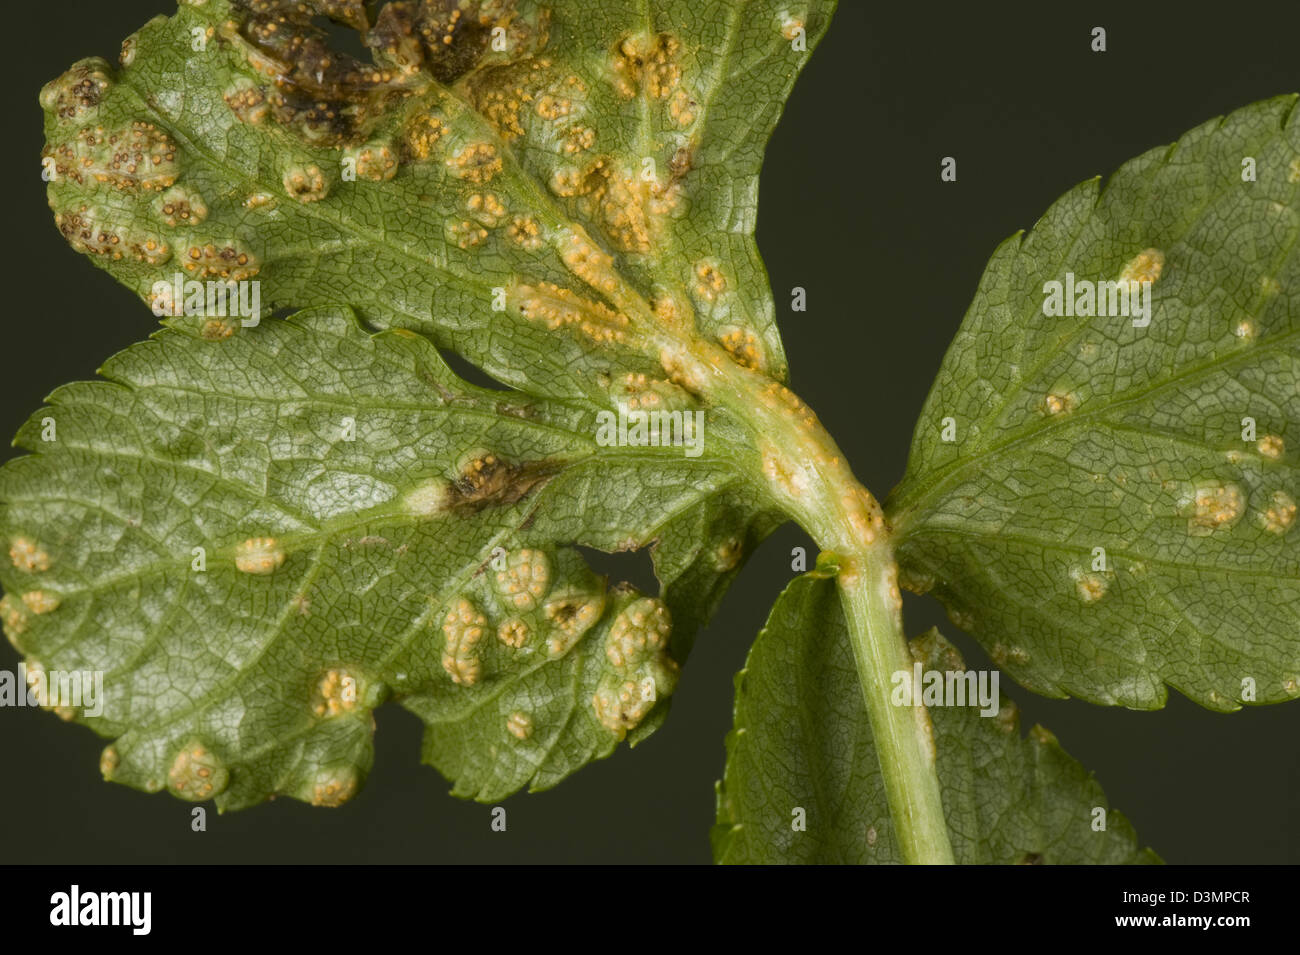 Alexanders rust, Puccinia smyrnii, pustules on the underside of alexanders leaves Stock Photo